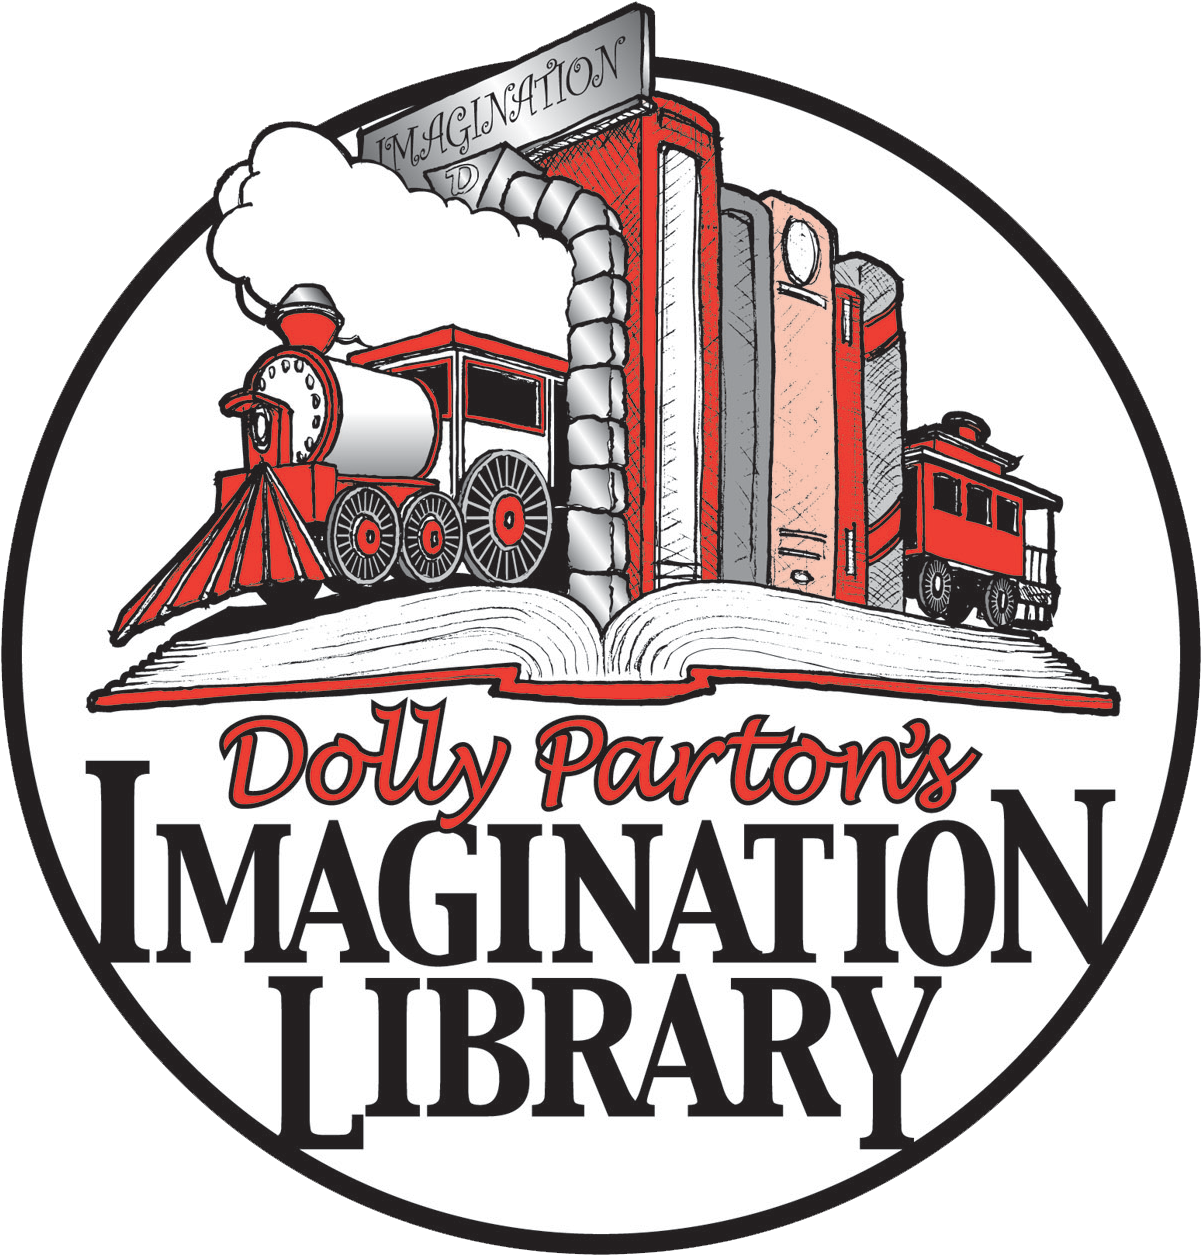 Dolly Parton's Imagination Library (1350x1350)